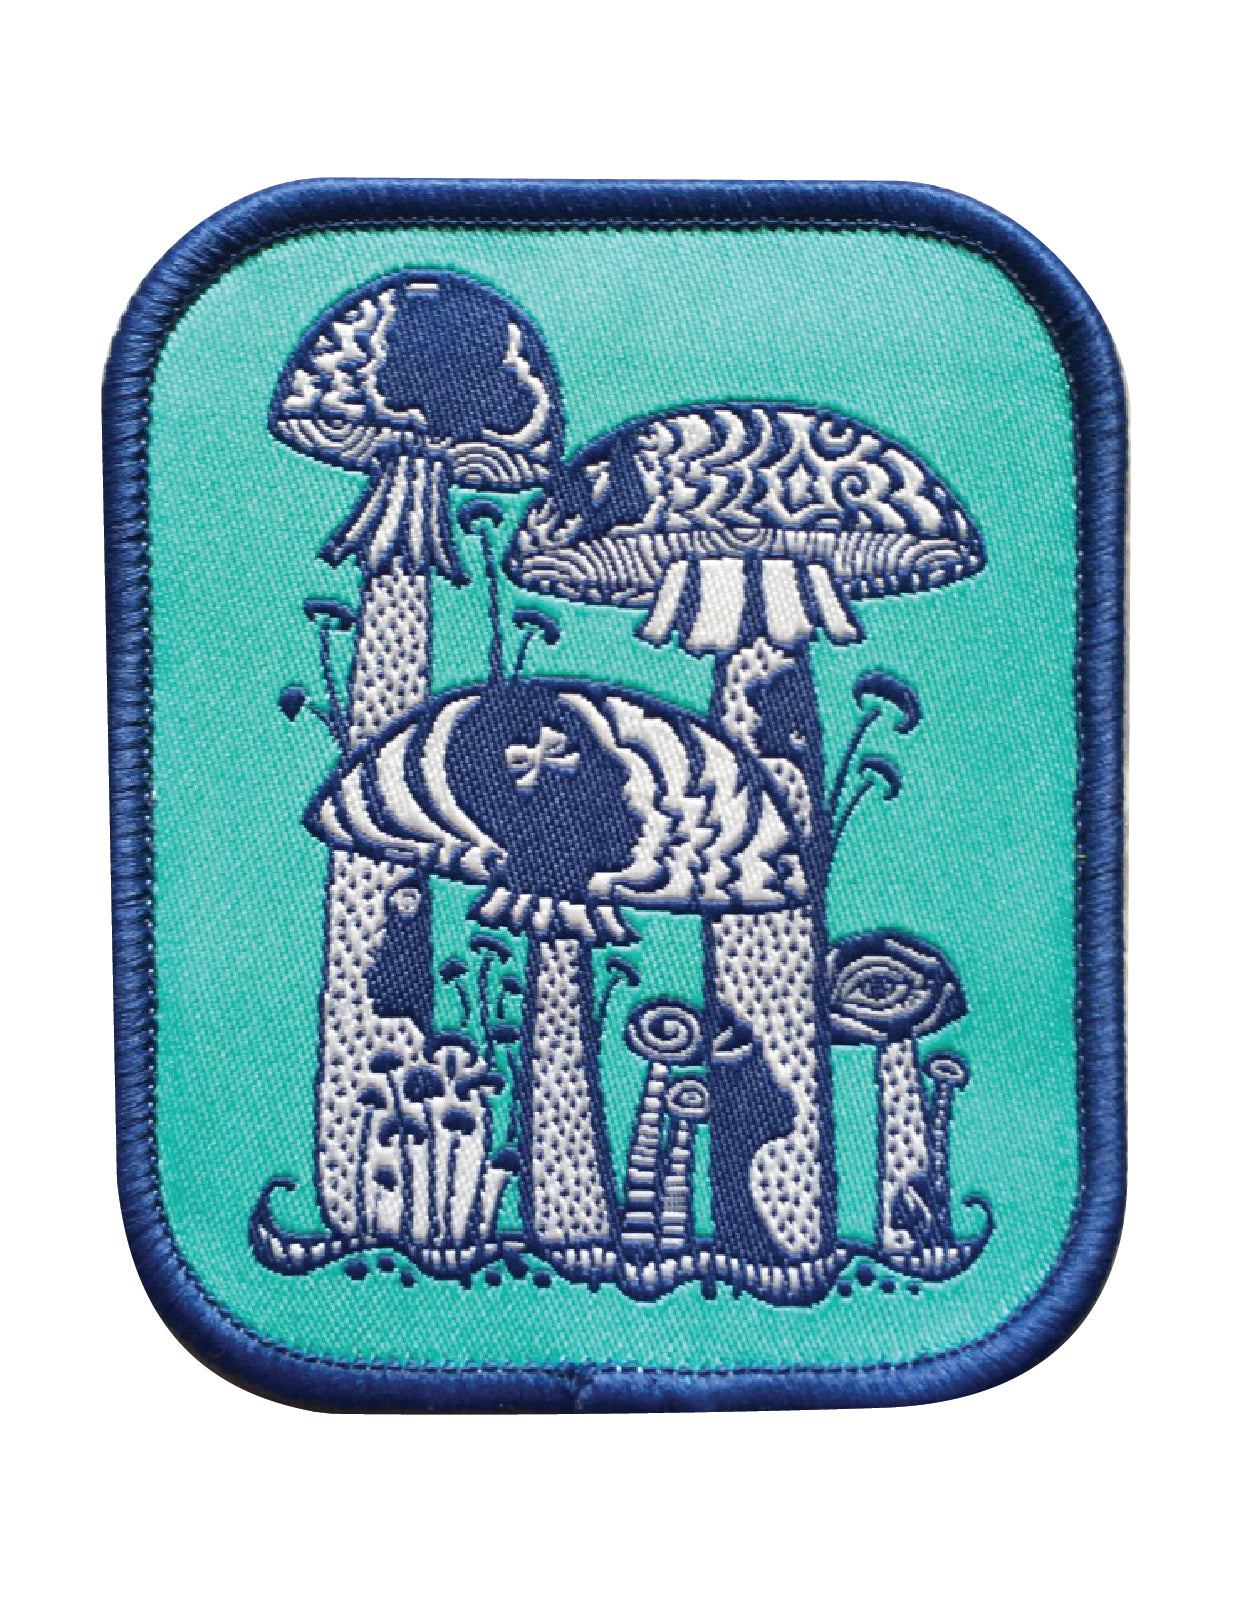 Aqua and indigo blue psychedelic mushroom iron on patch 